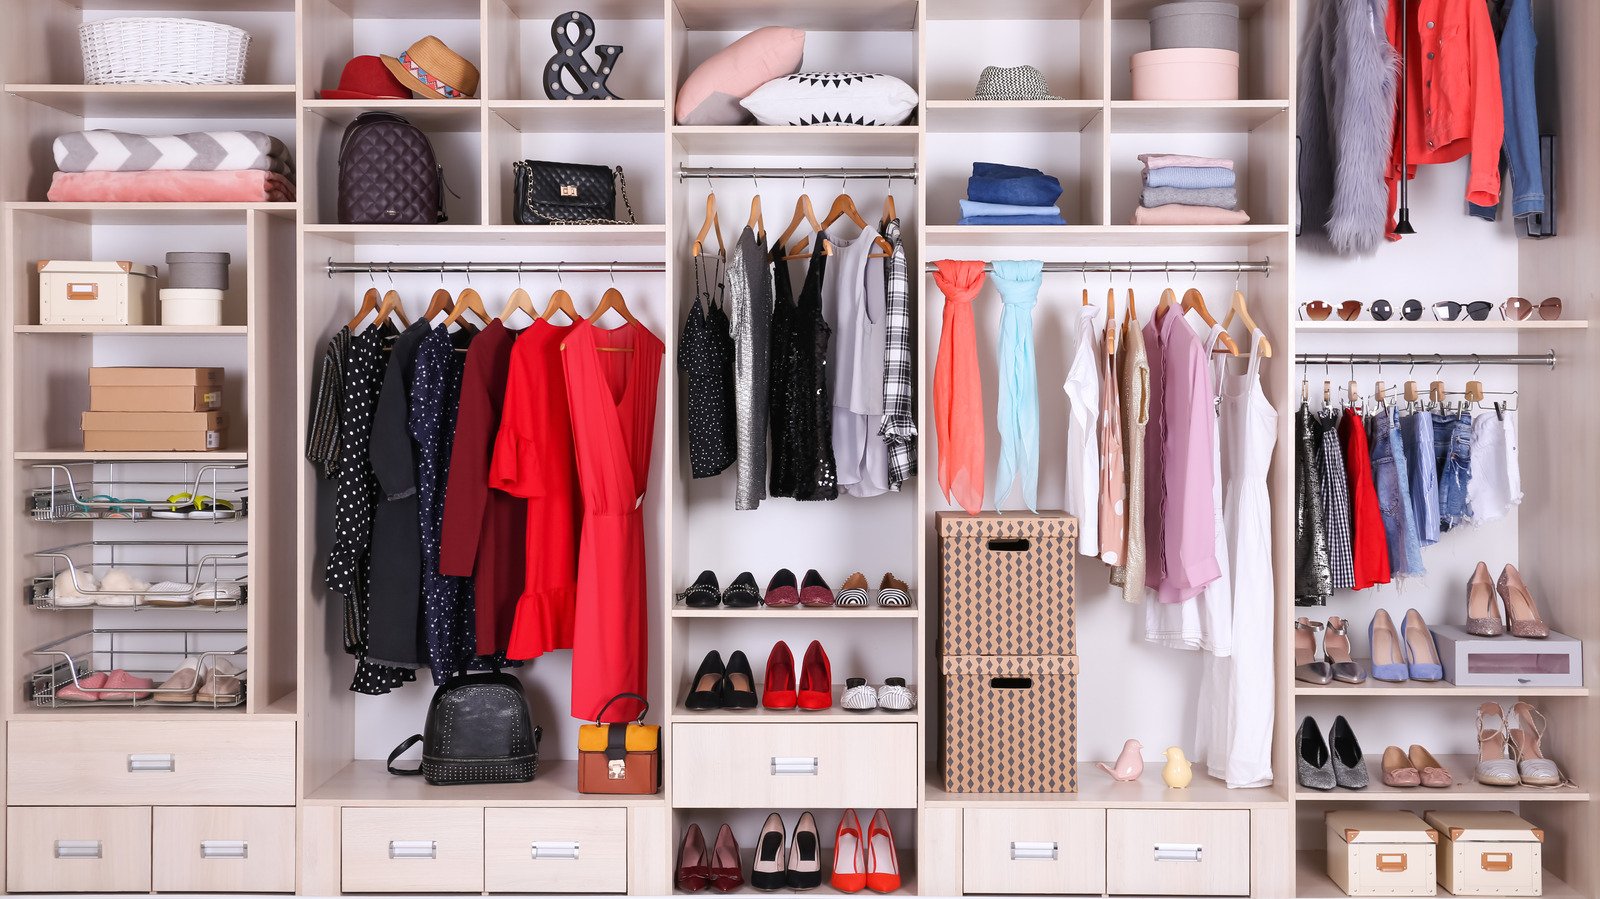 How To Create More Closet Storage, According To A Professional Organizer